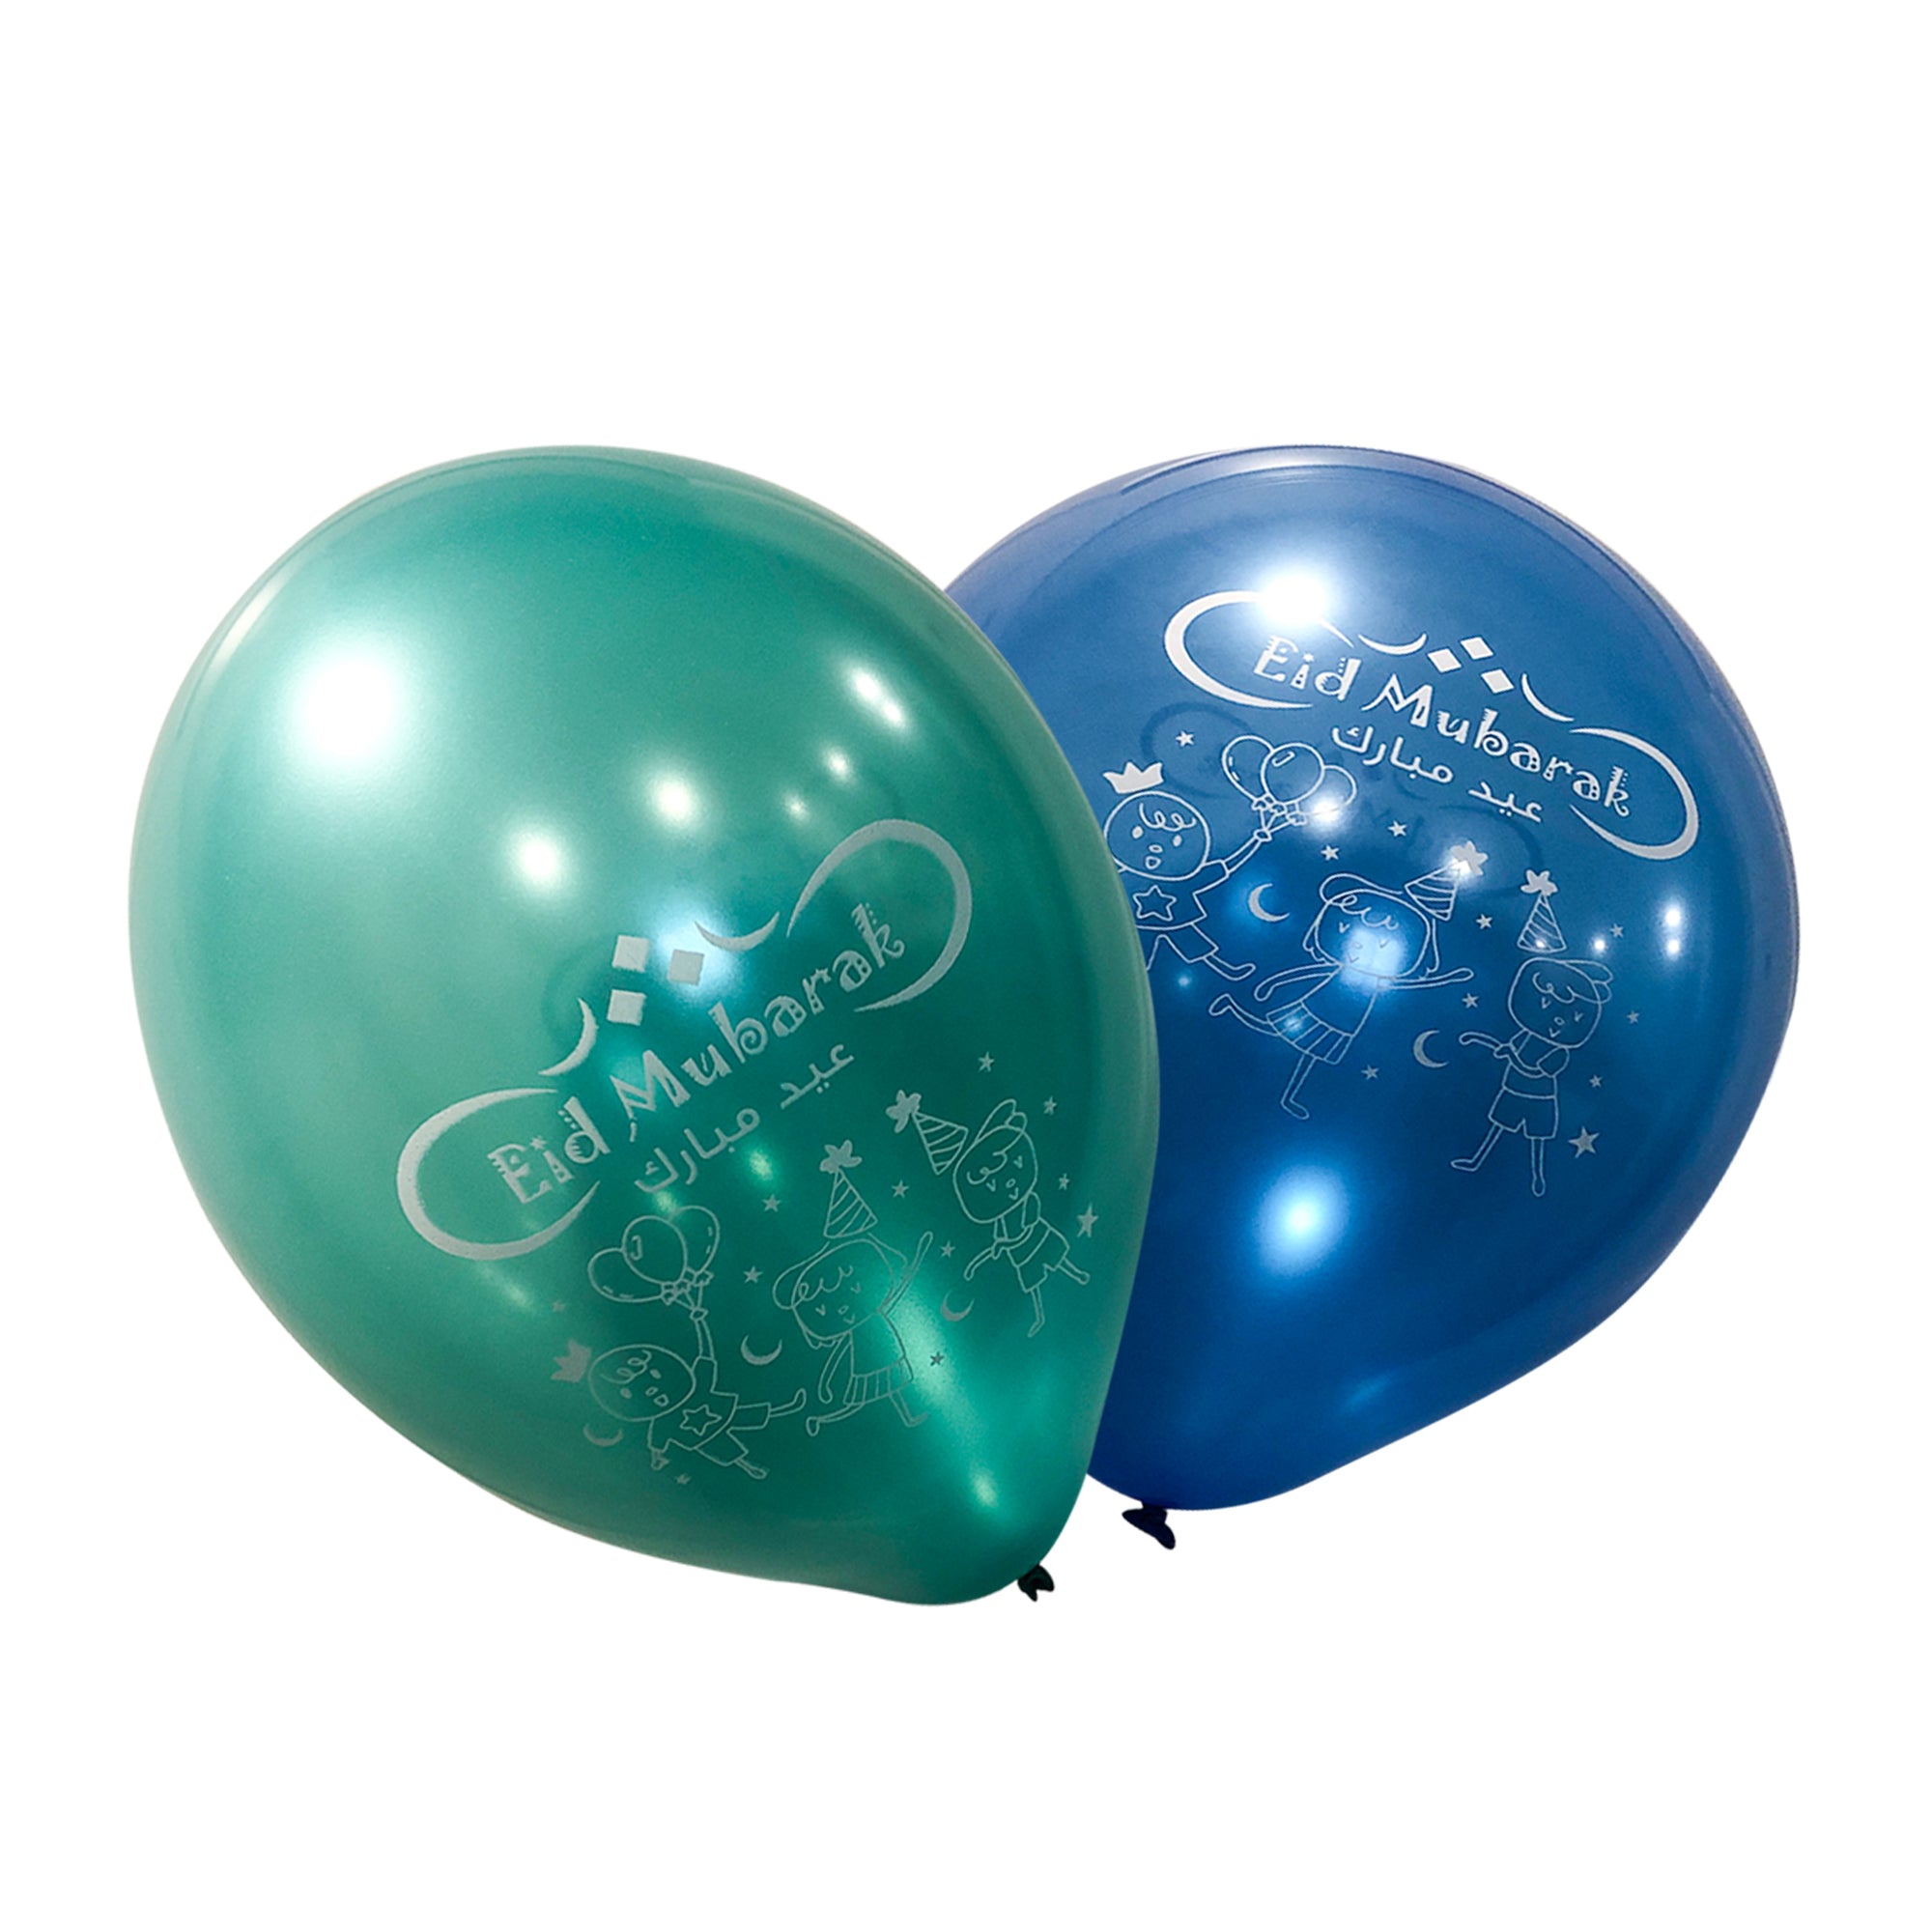 Eid Mubarak Latex Balloons (Assorted Metallic Colors, Pack of 50)